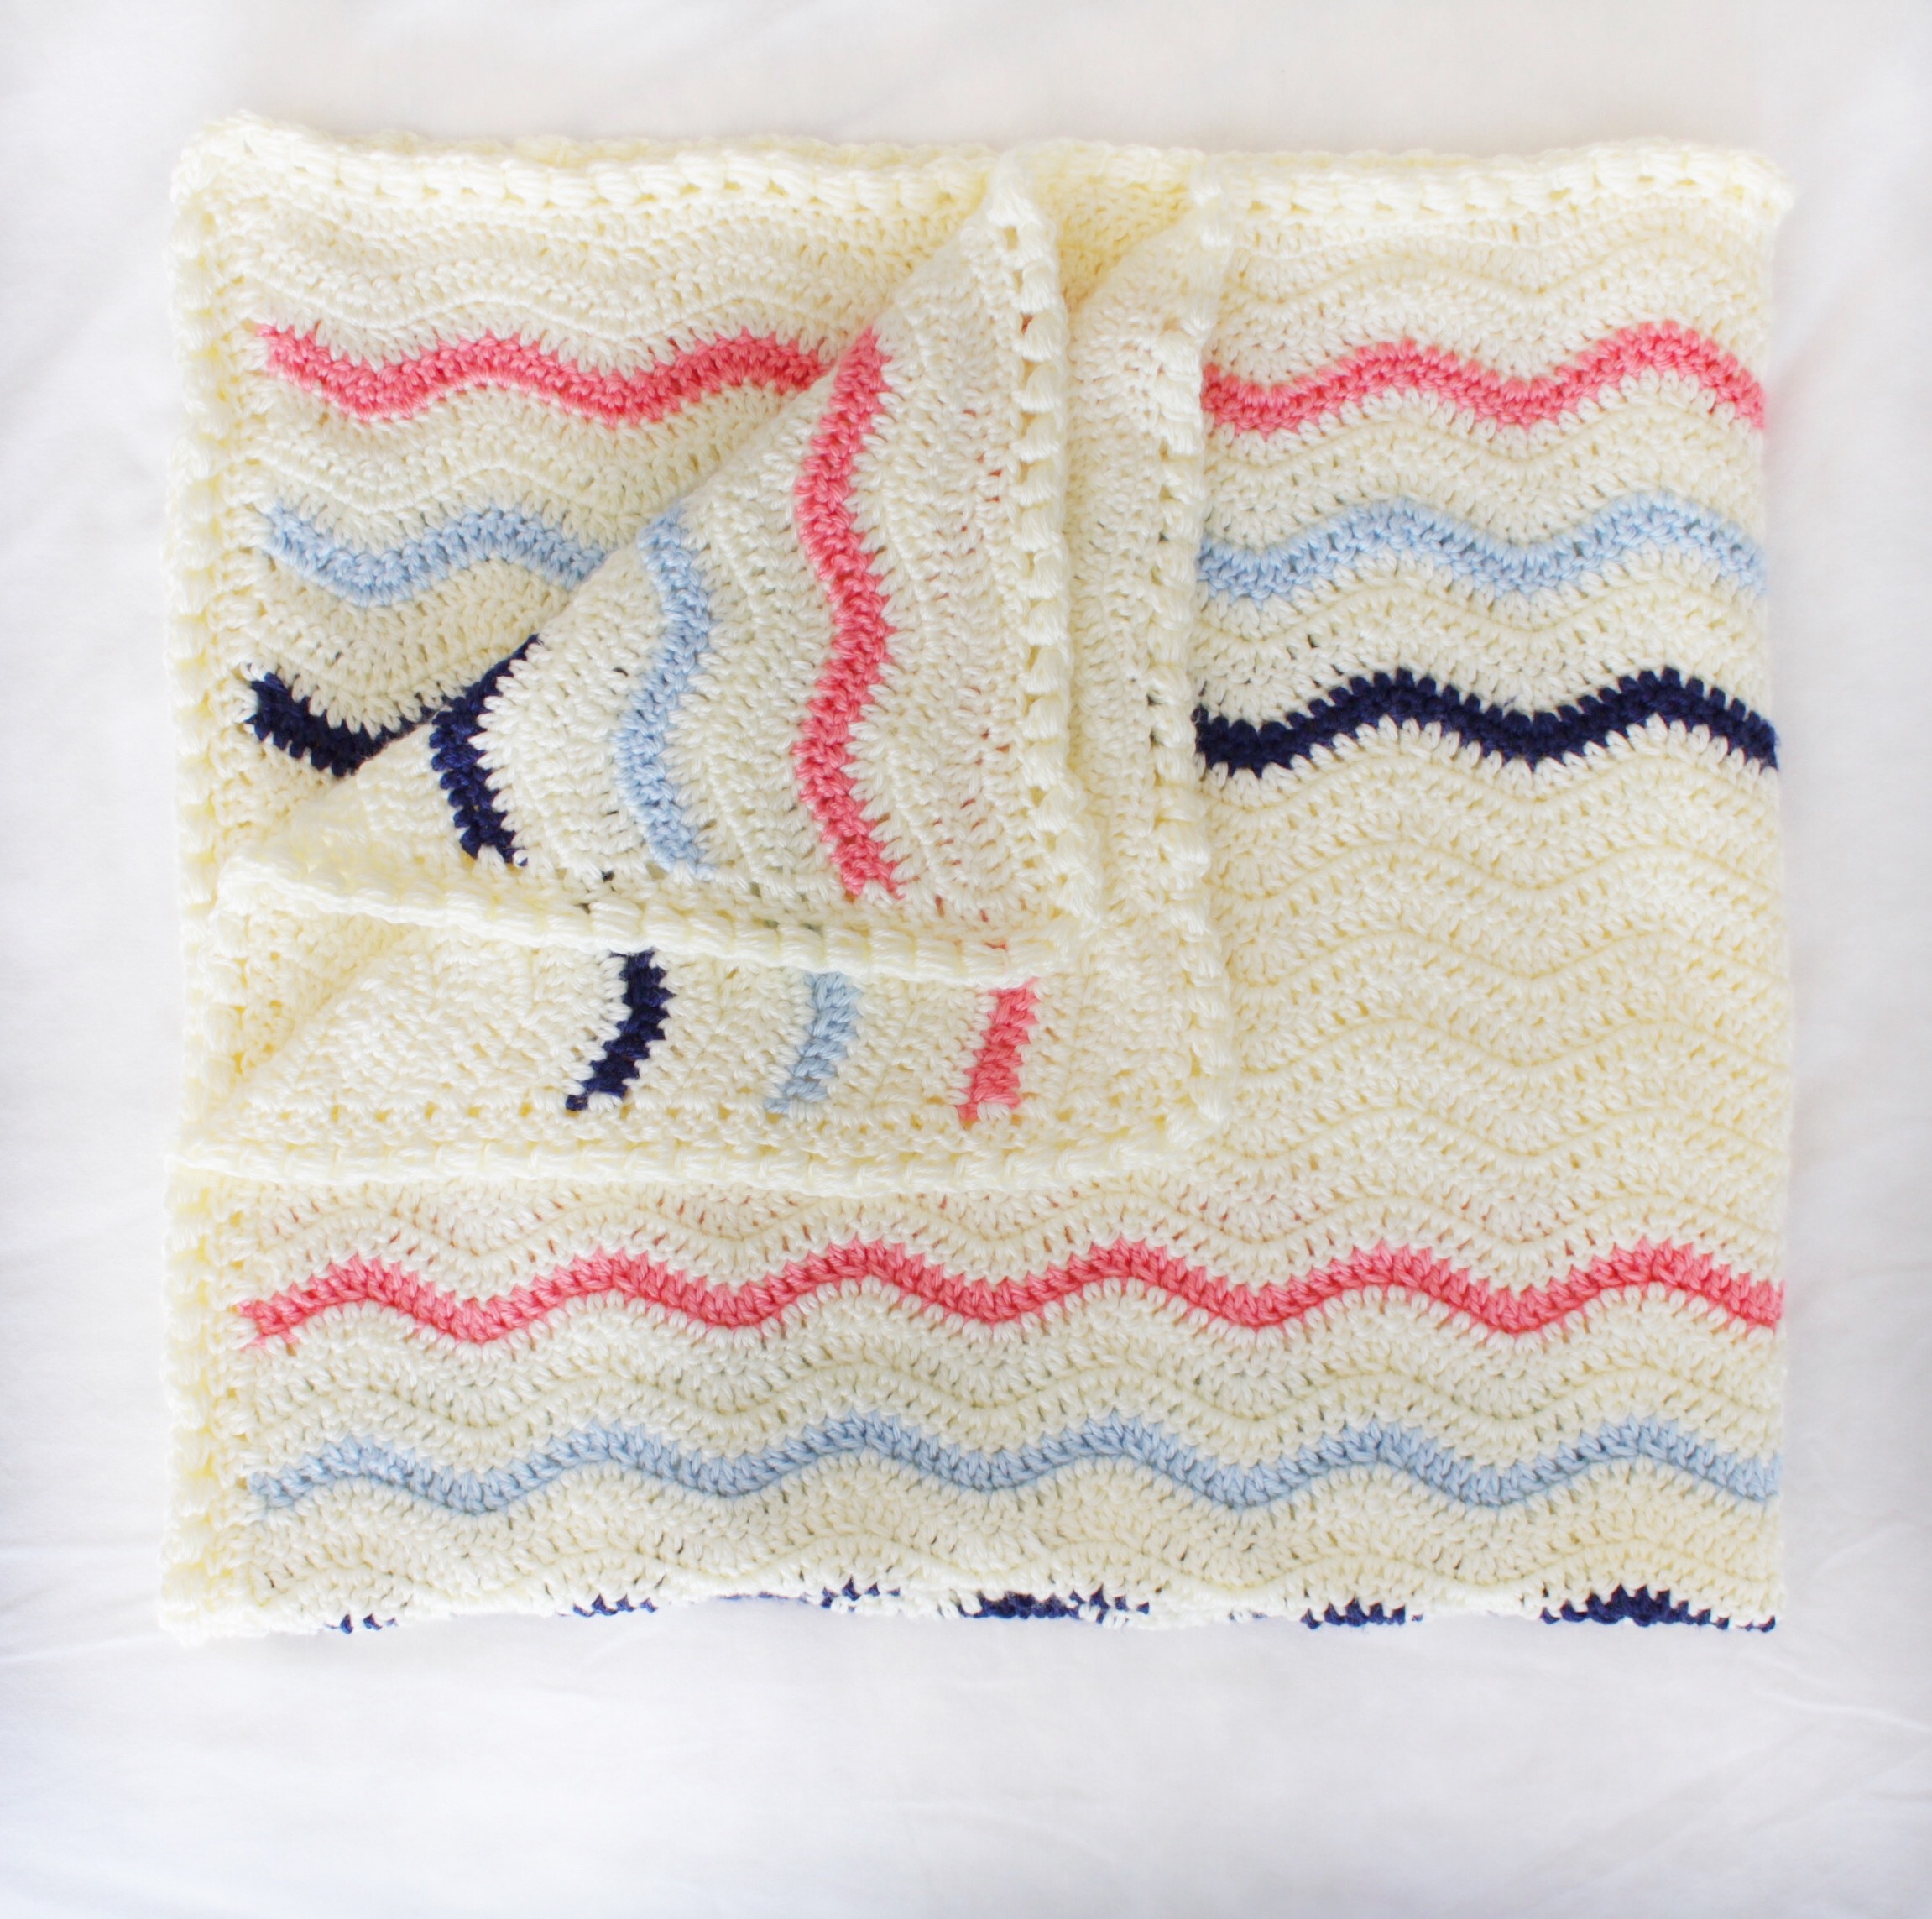 Crochet Simple Ripple Blanket - Daisy Farm Crafts